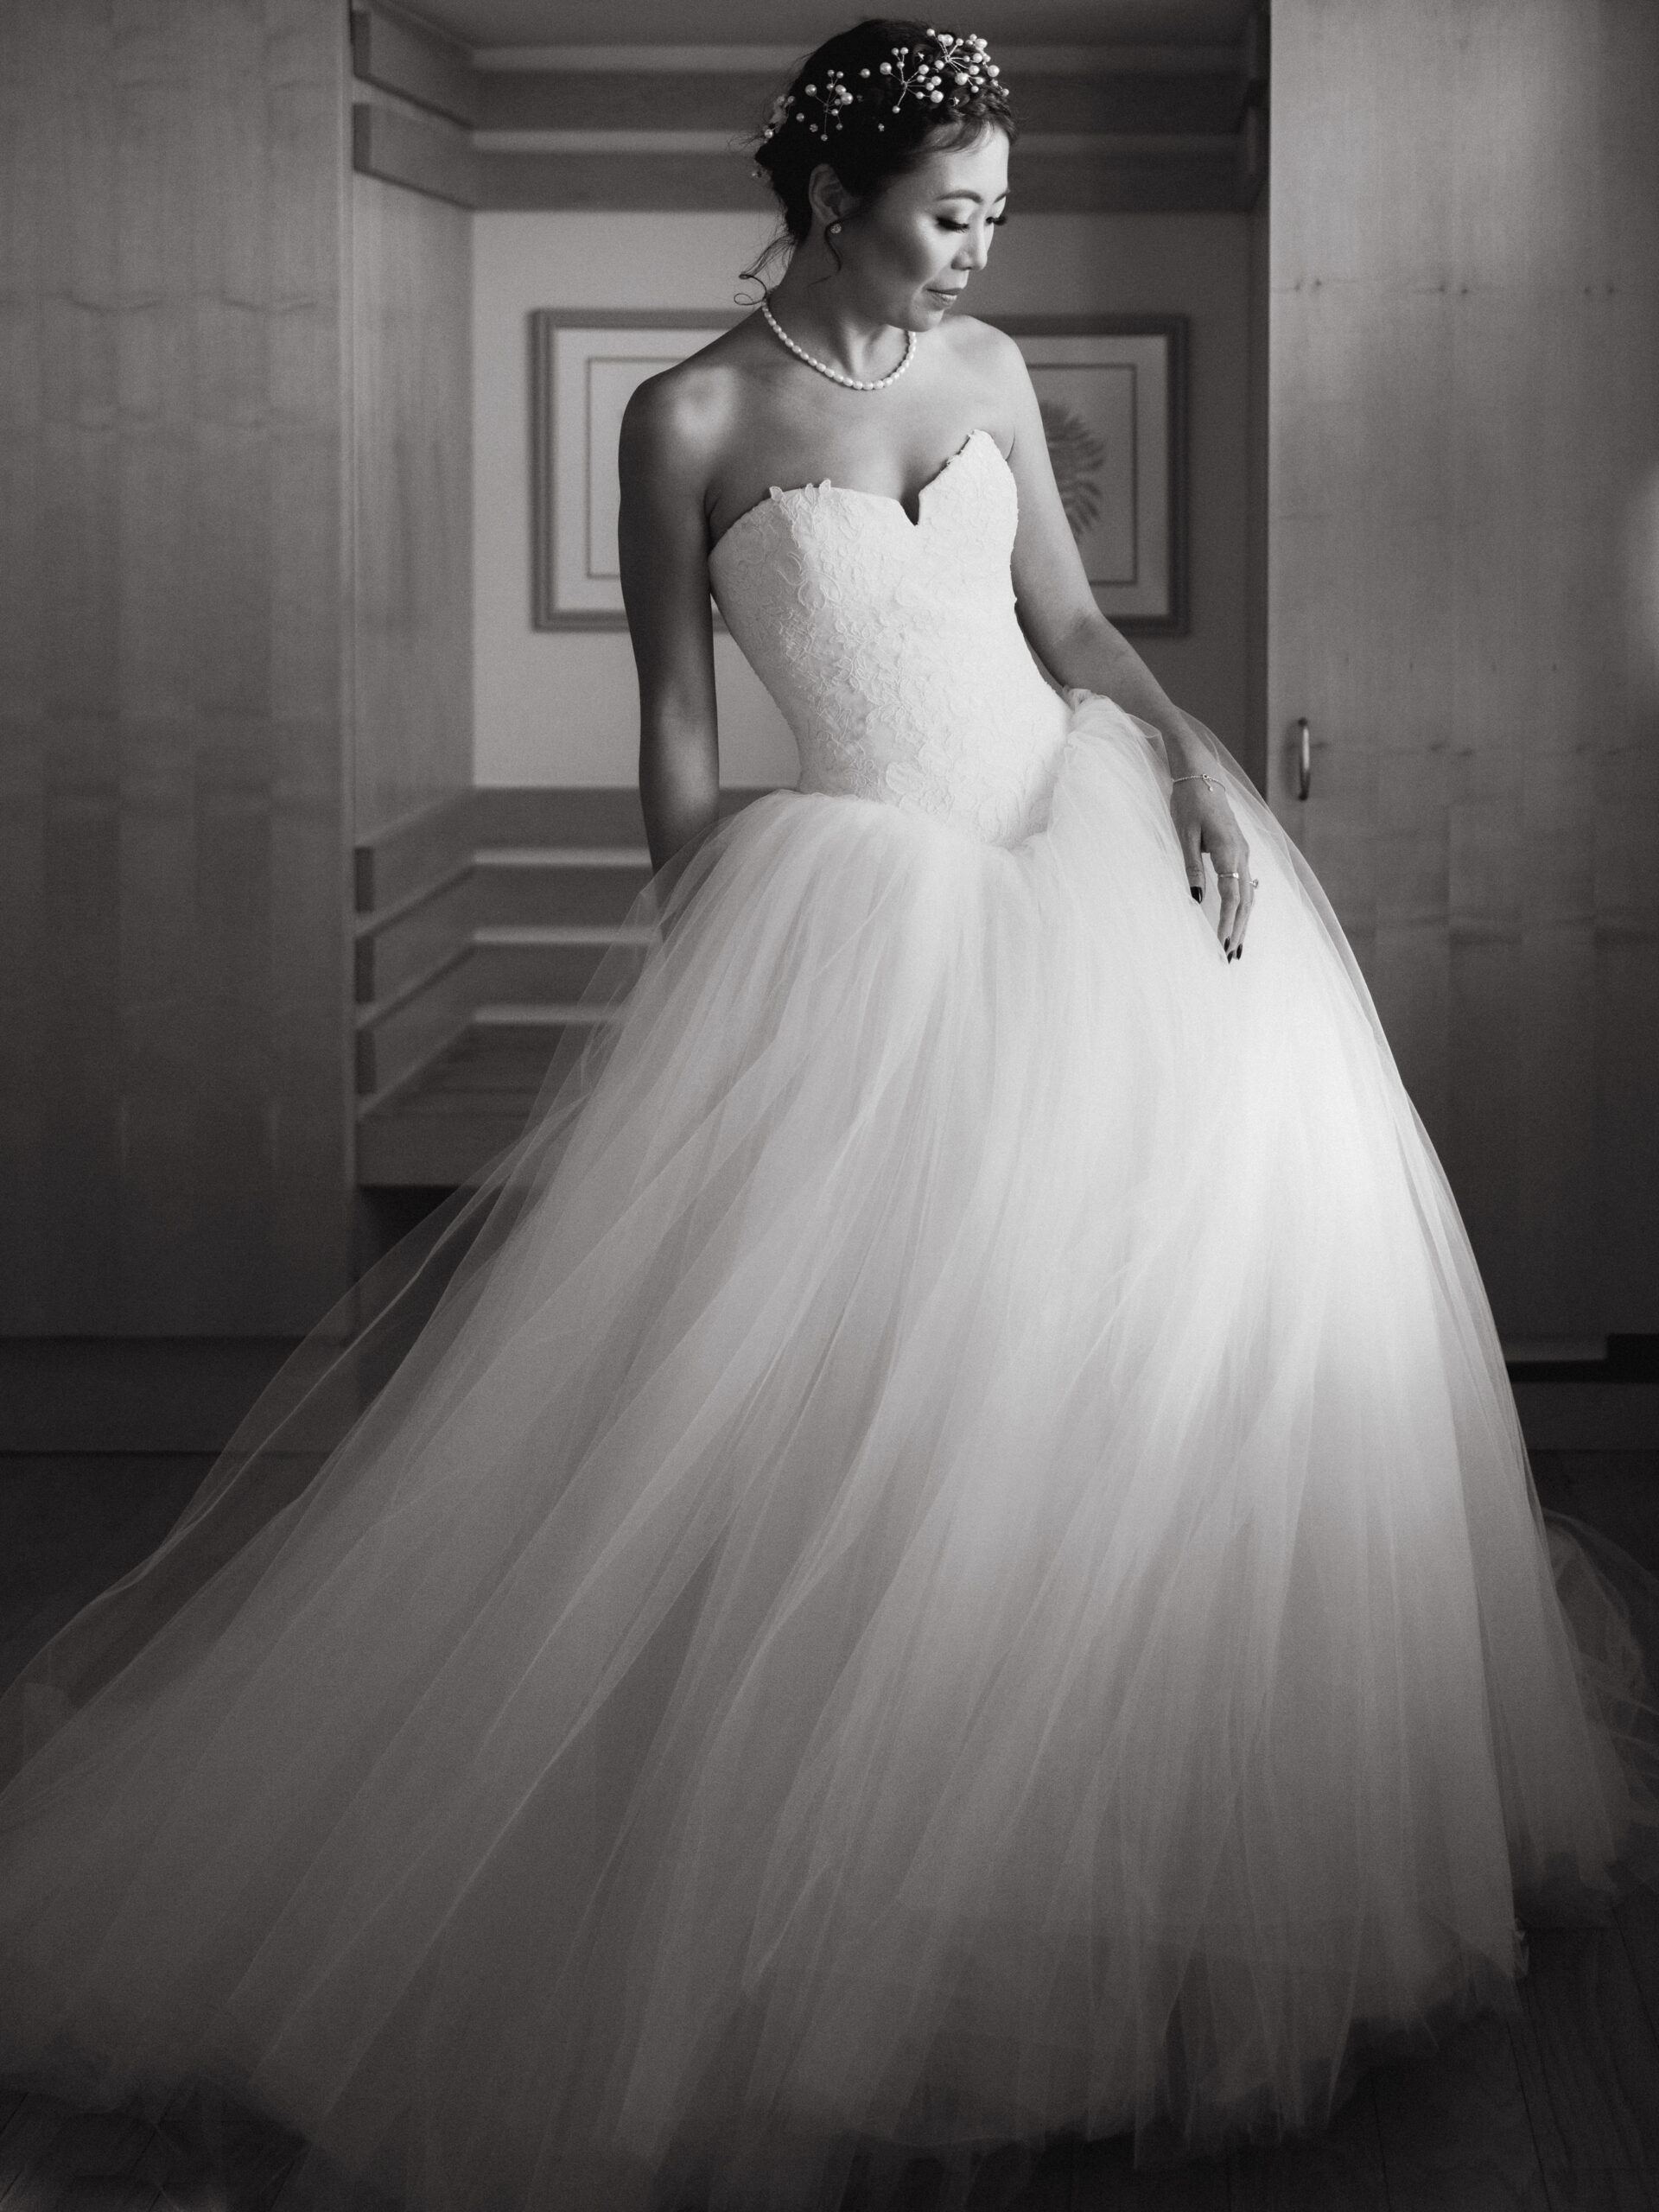 Editorial full body photo of the bride. Fine art wedding photography image by Jenny Fu Studio